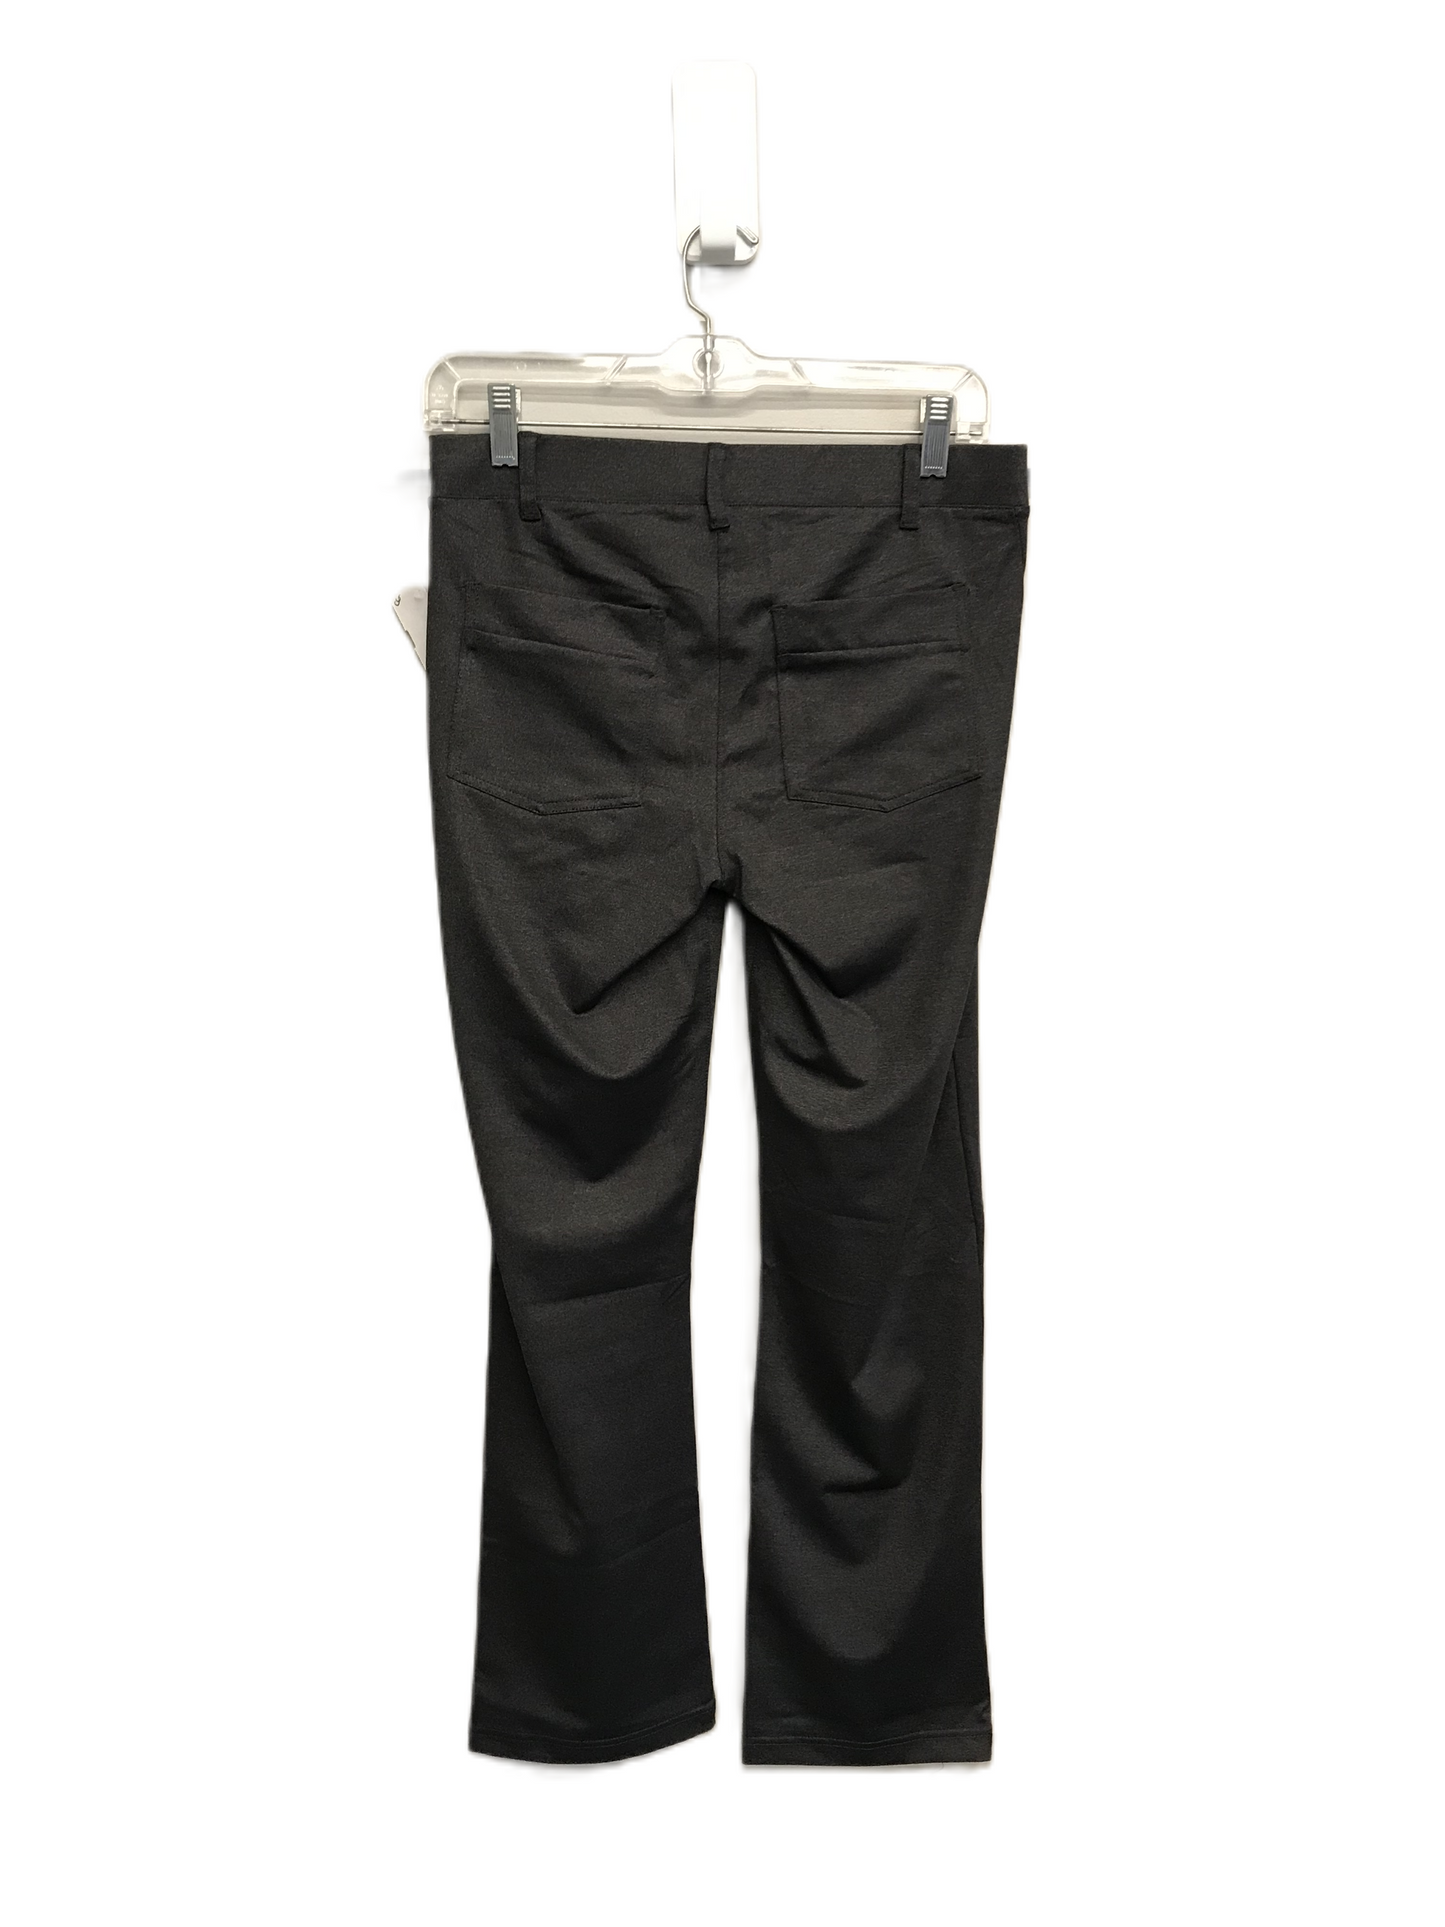 Grey Pants Dress By YogiPace Size: 8